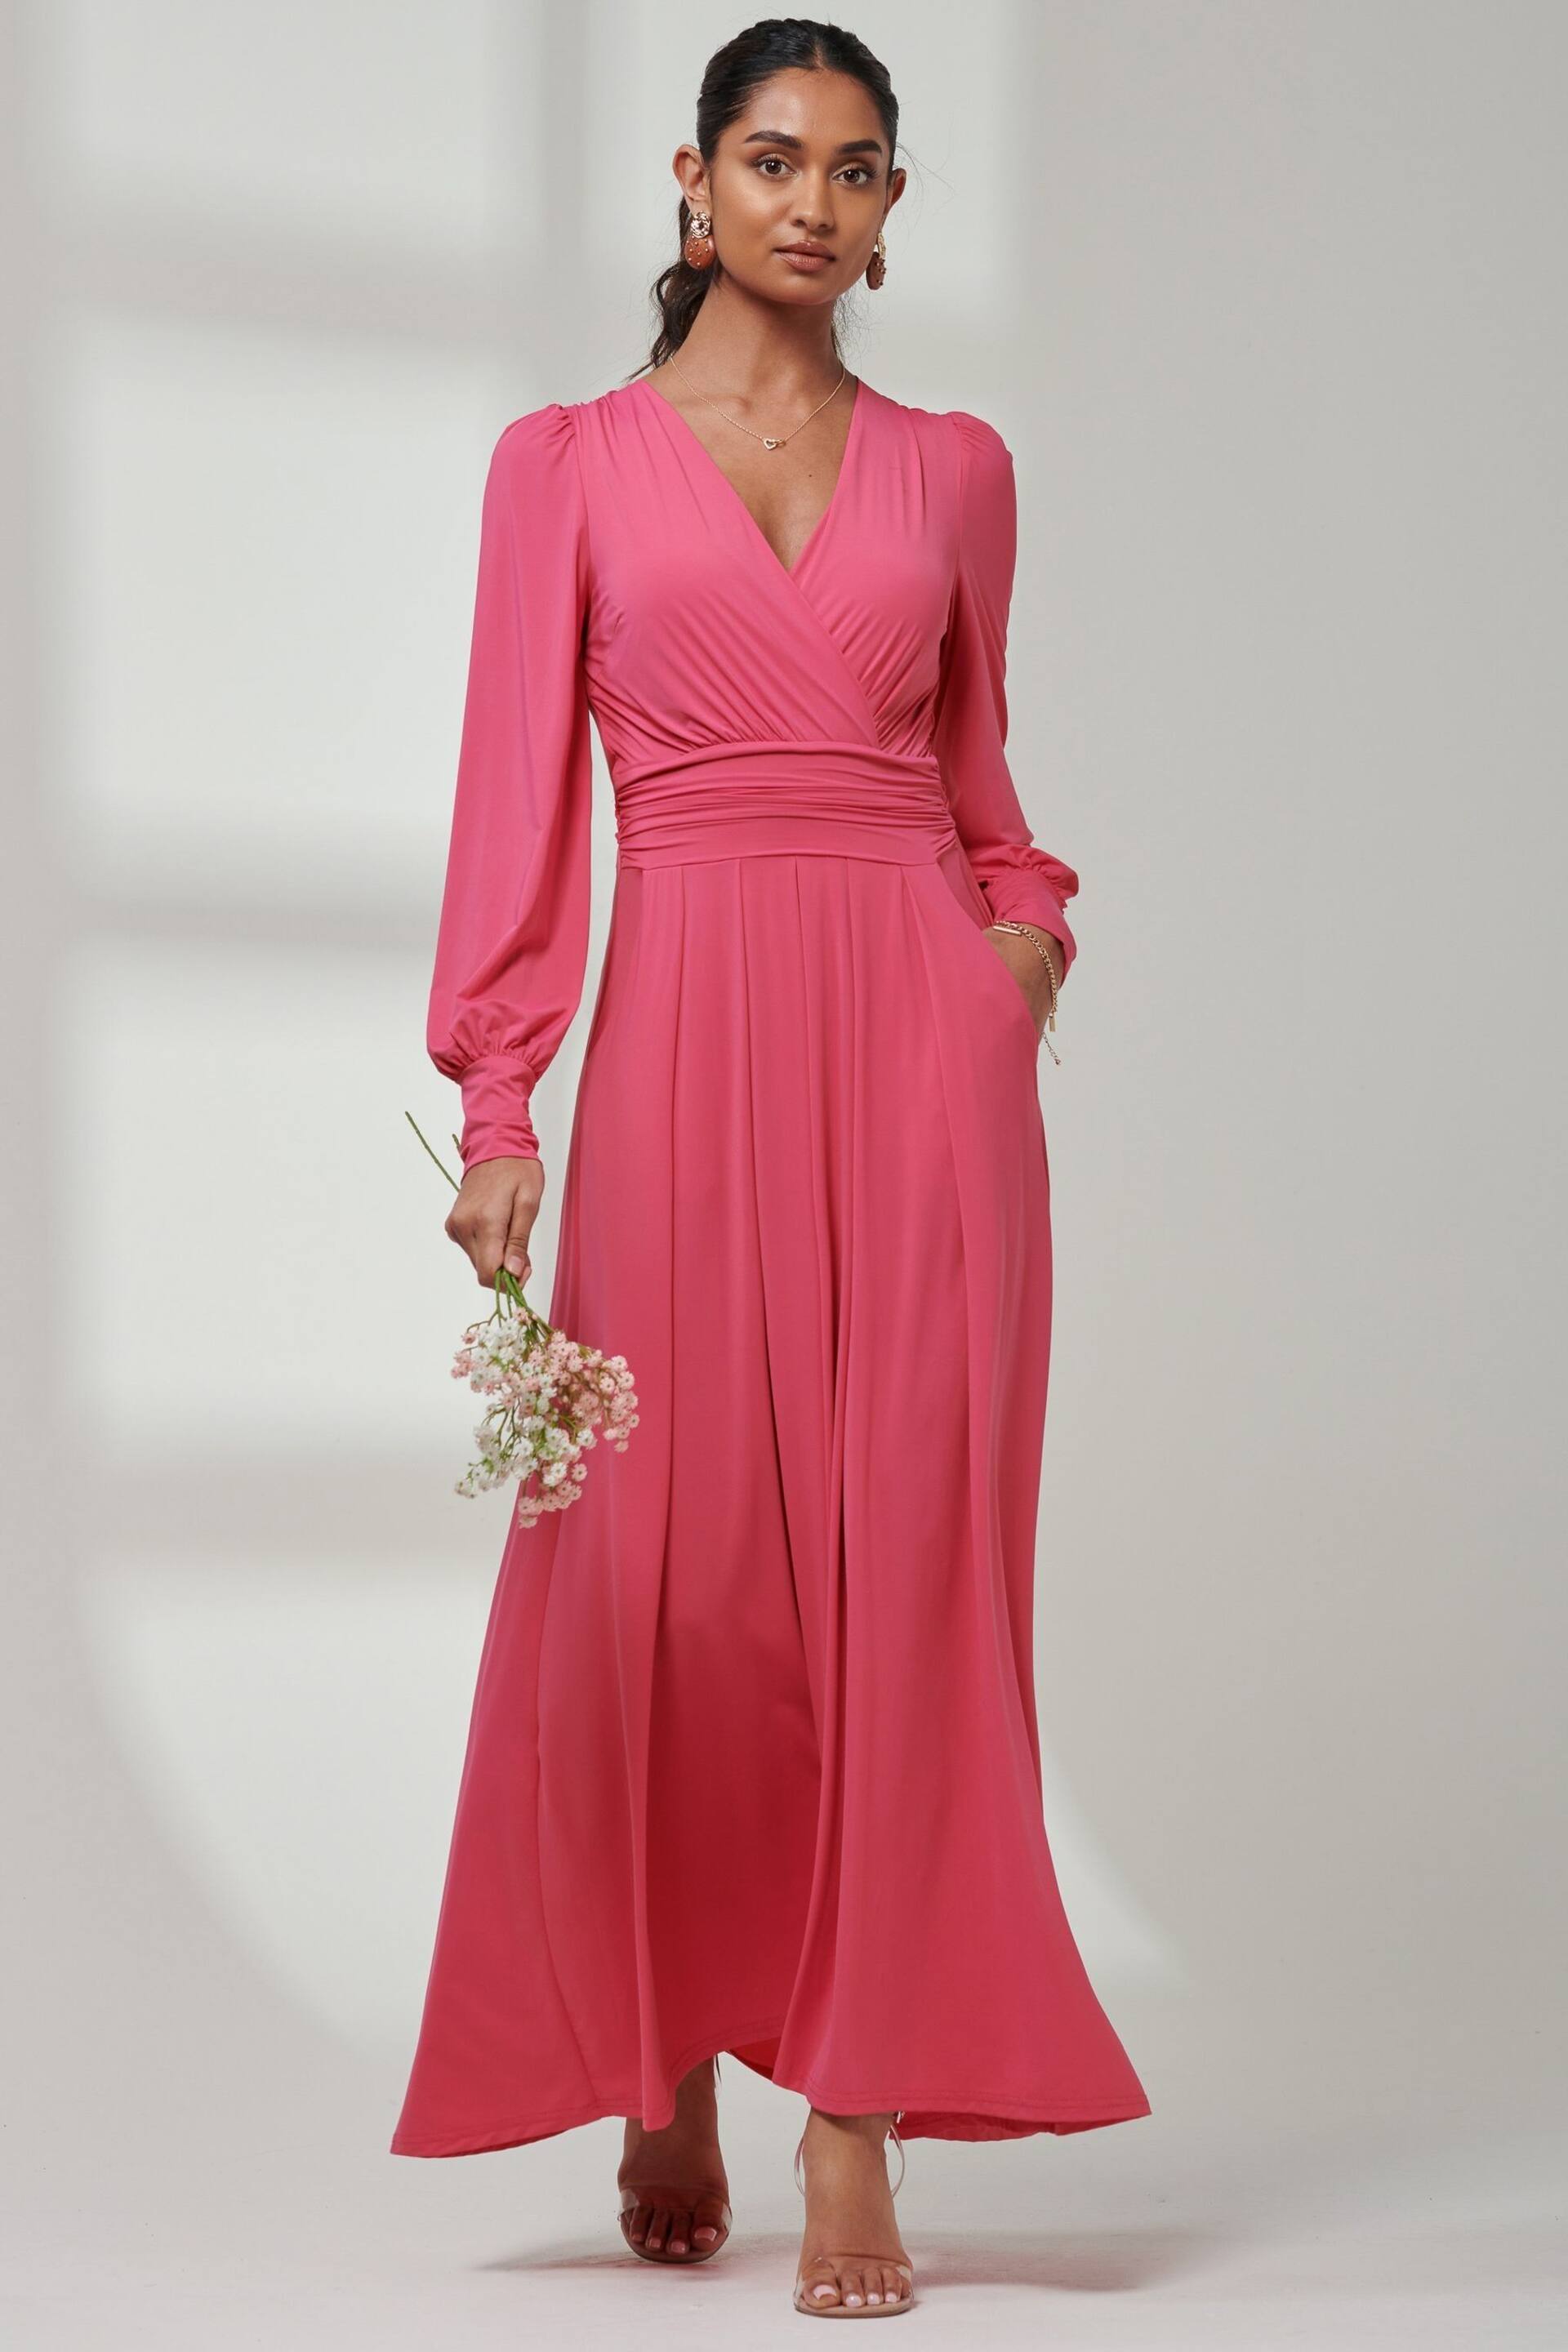 Jolie Moi Pink Giulia Long Sleeve Maxi Dress - Image 4 of 6